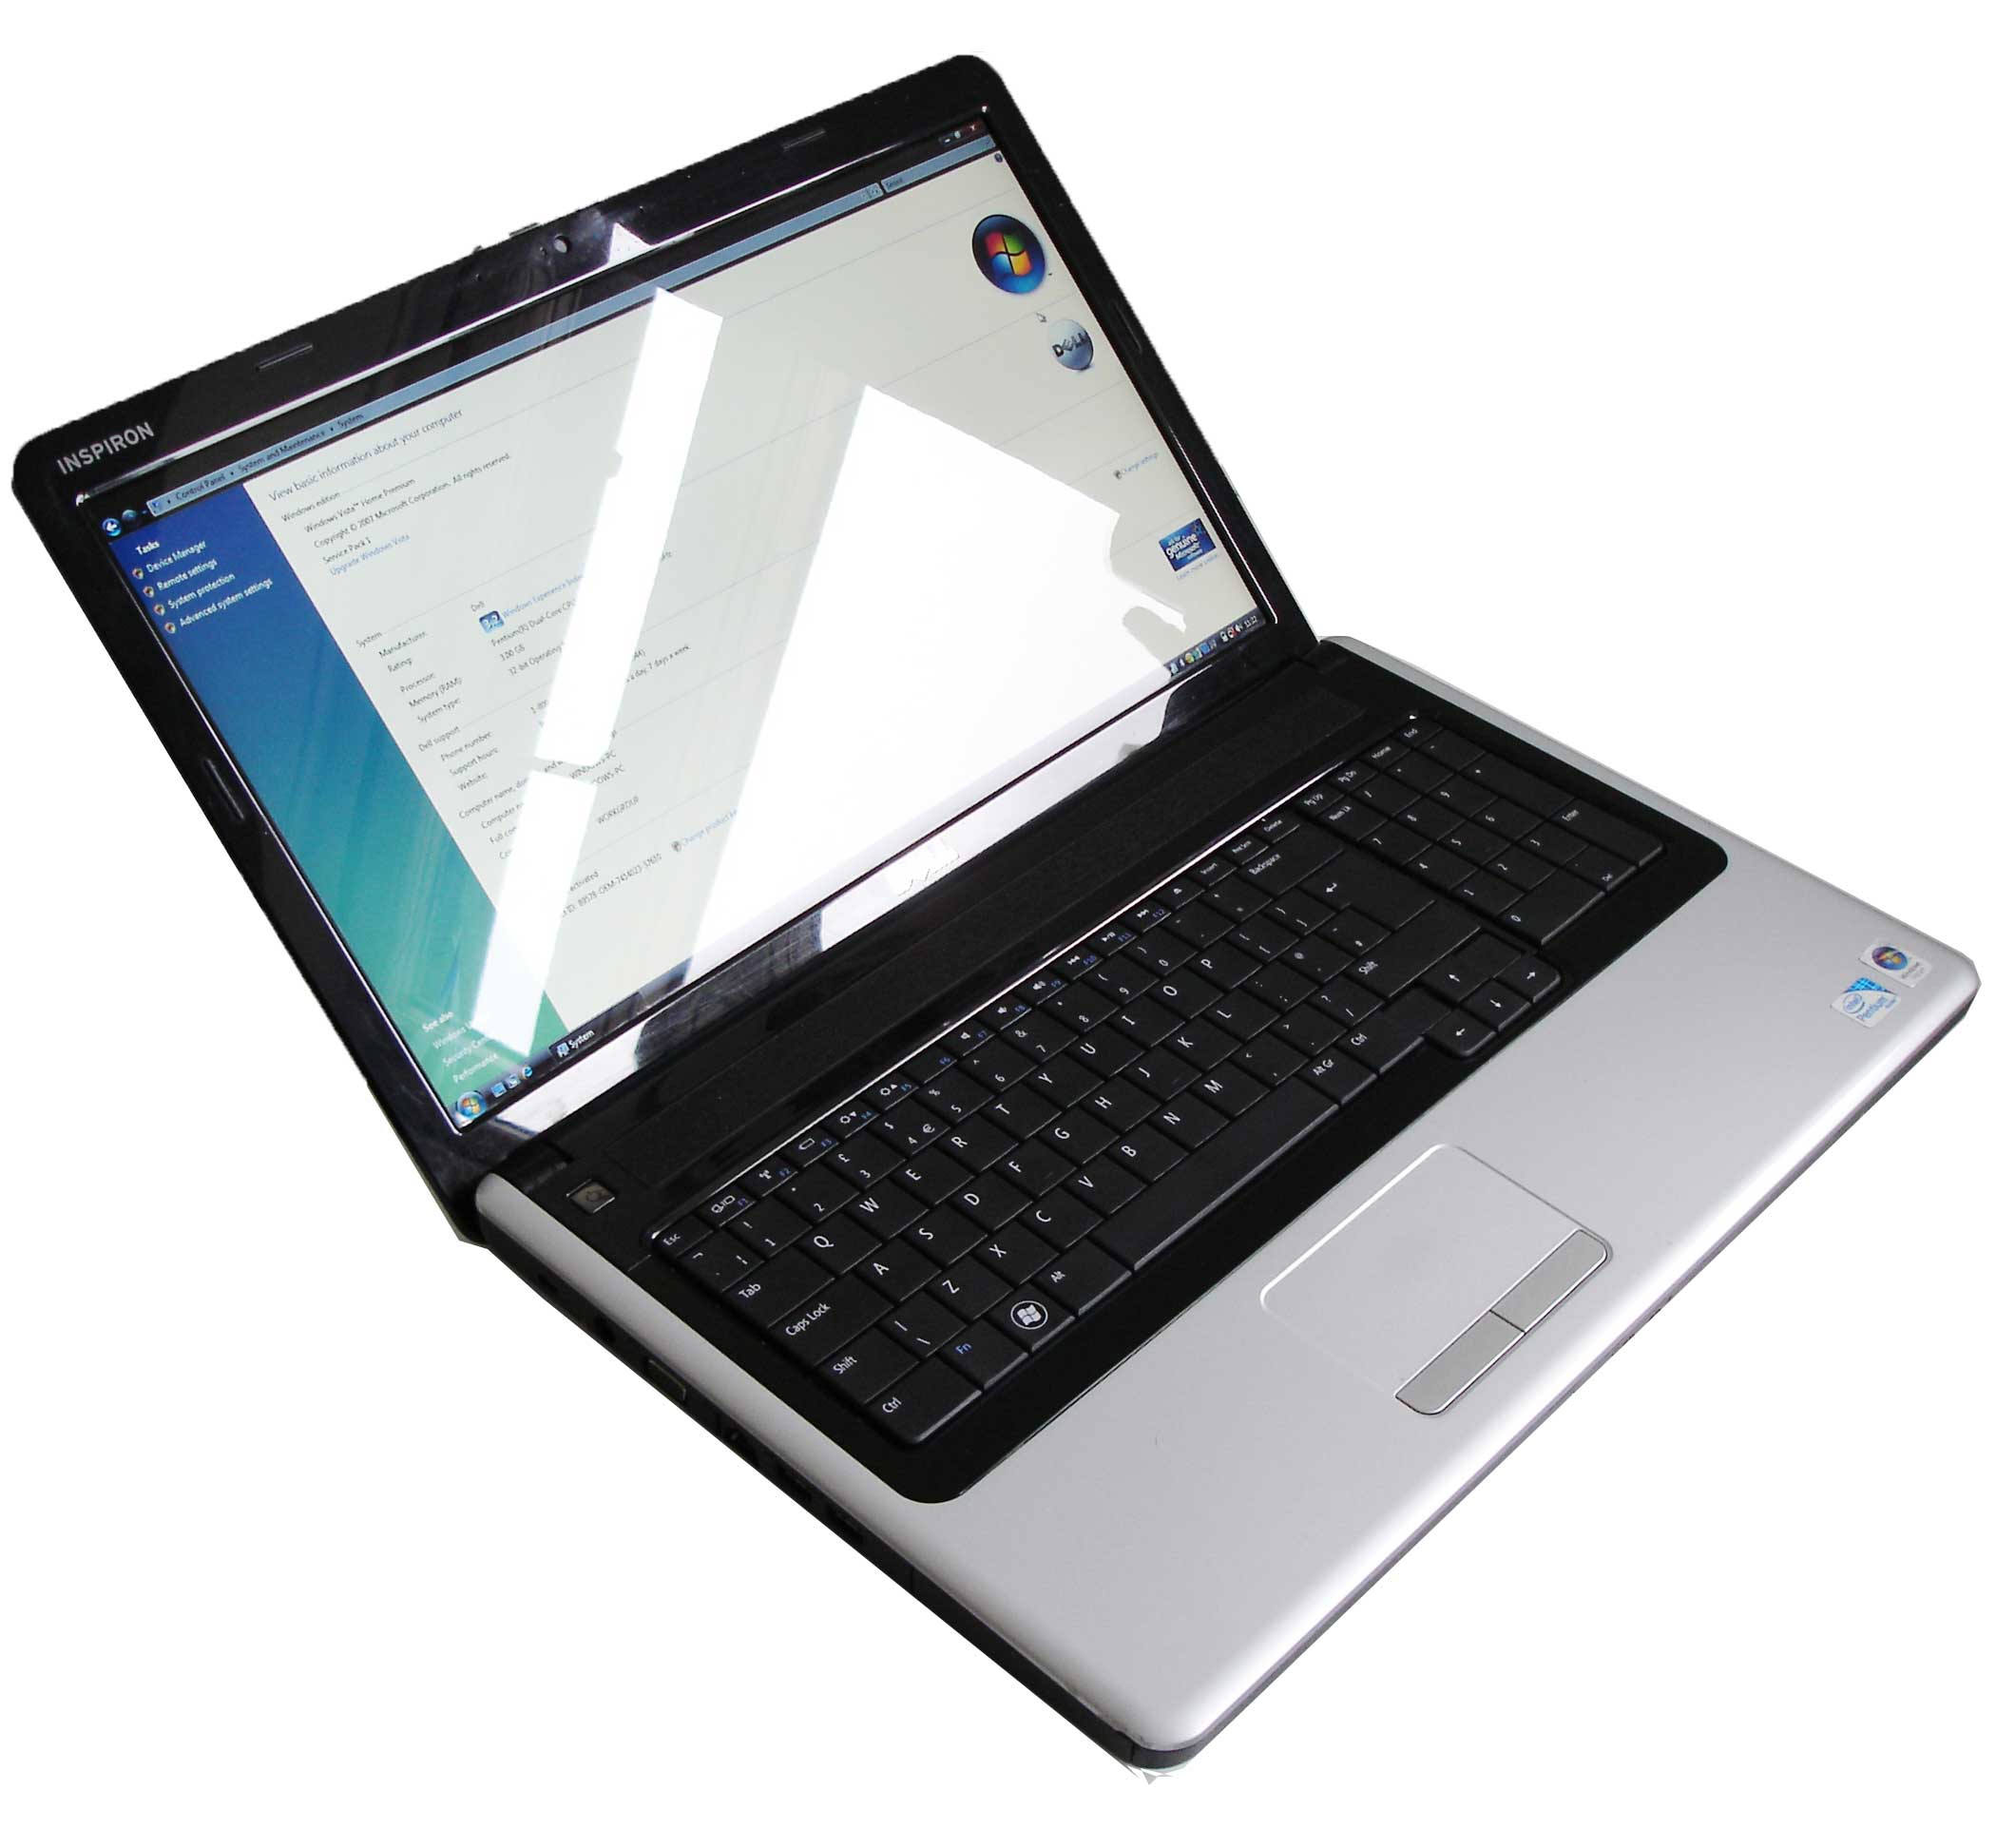 Dell Inspiron 1750 Laptop Windows Vista Home Premium